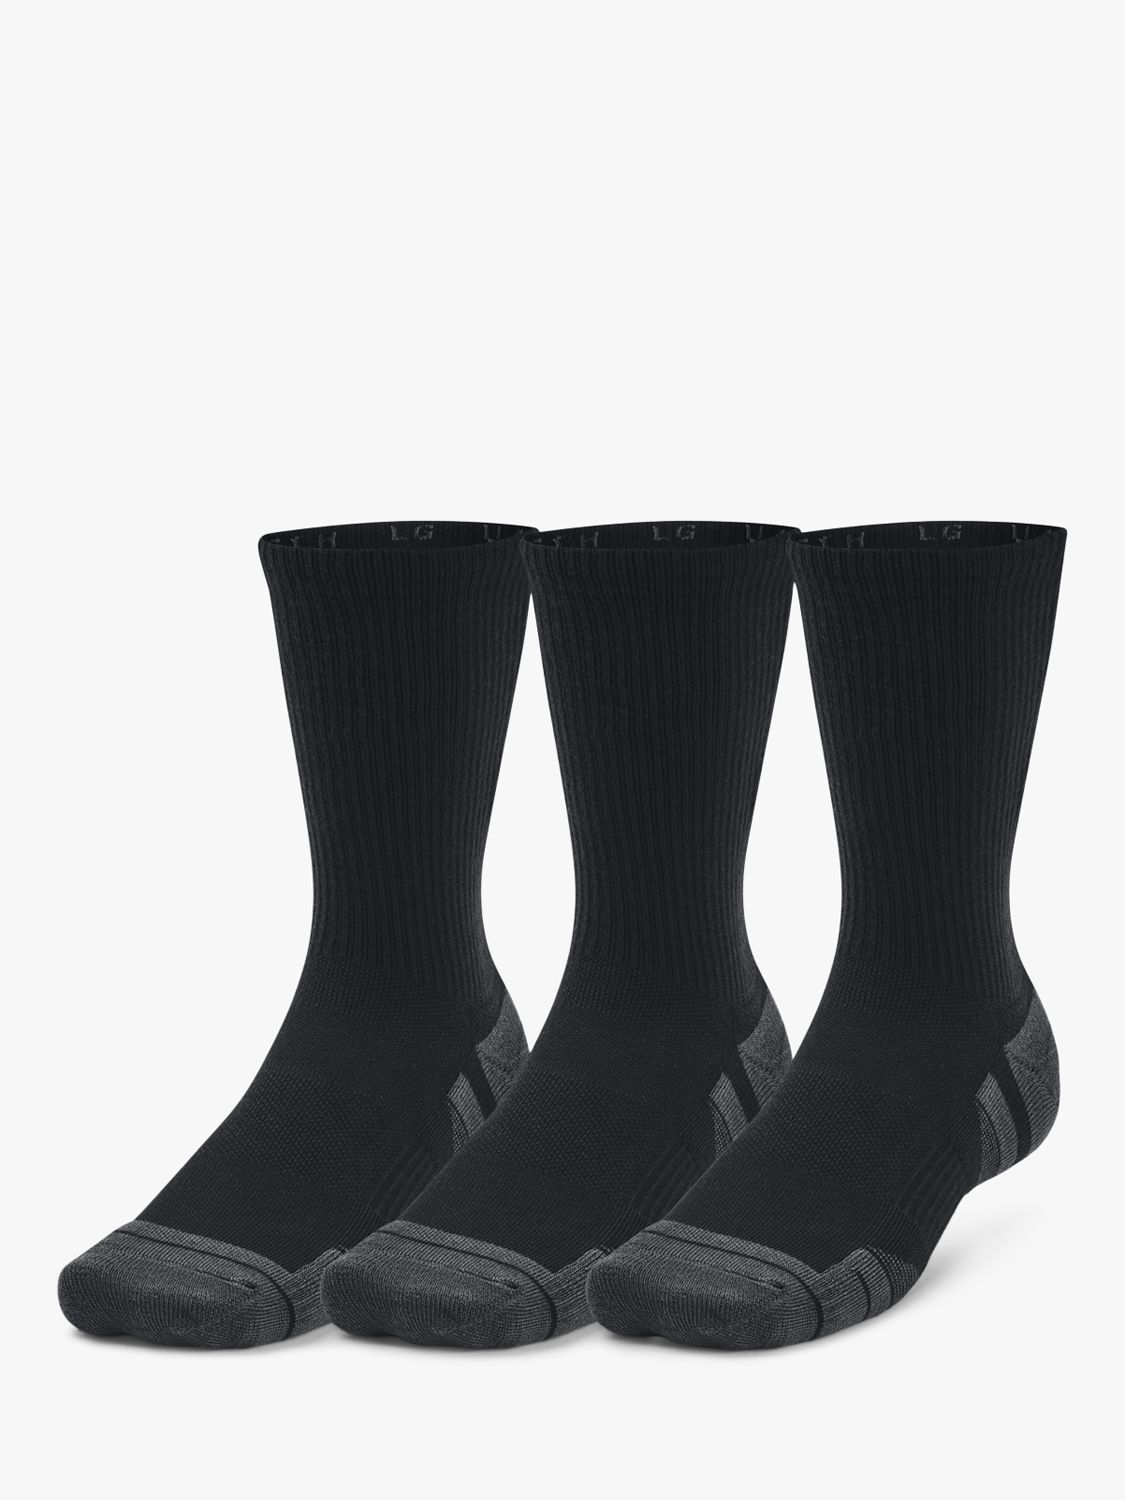 Under Armour Performance Tech Crew Socks, Pack of 3, Black/Jet Gray, XL